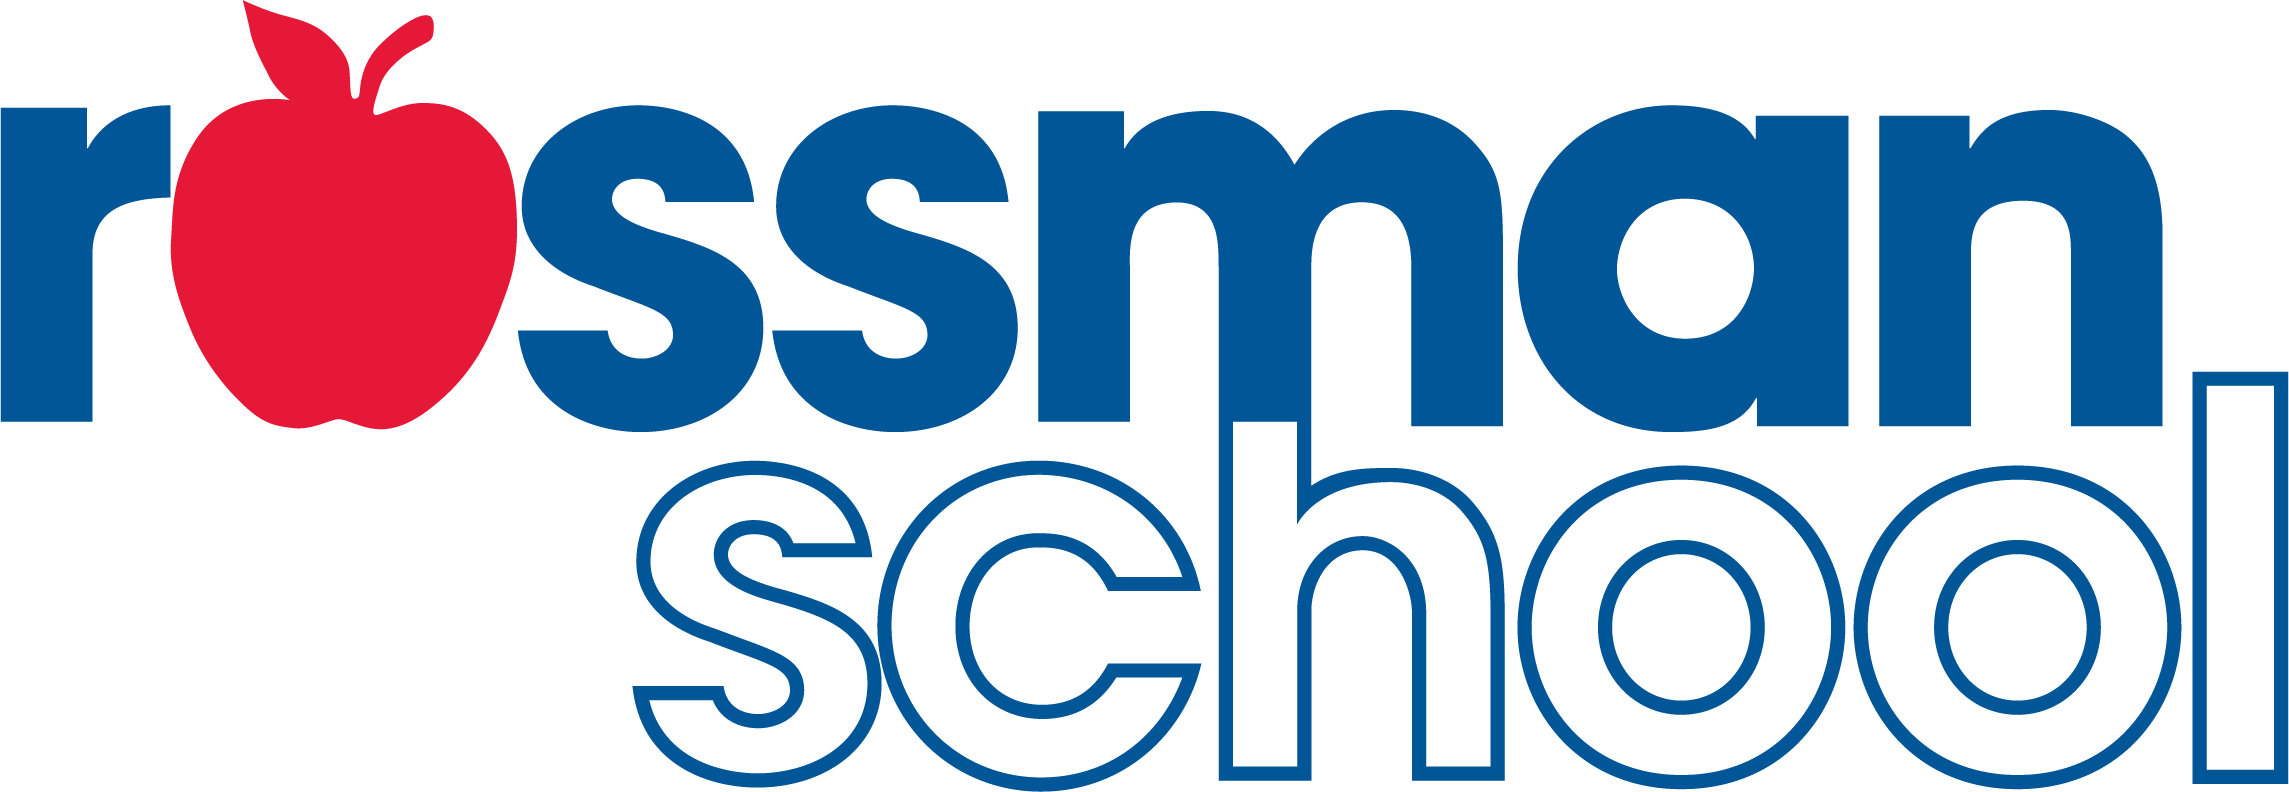 Rossman School Company Logo